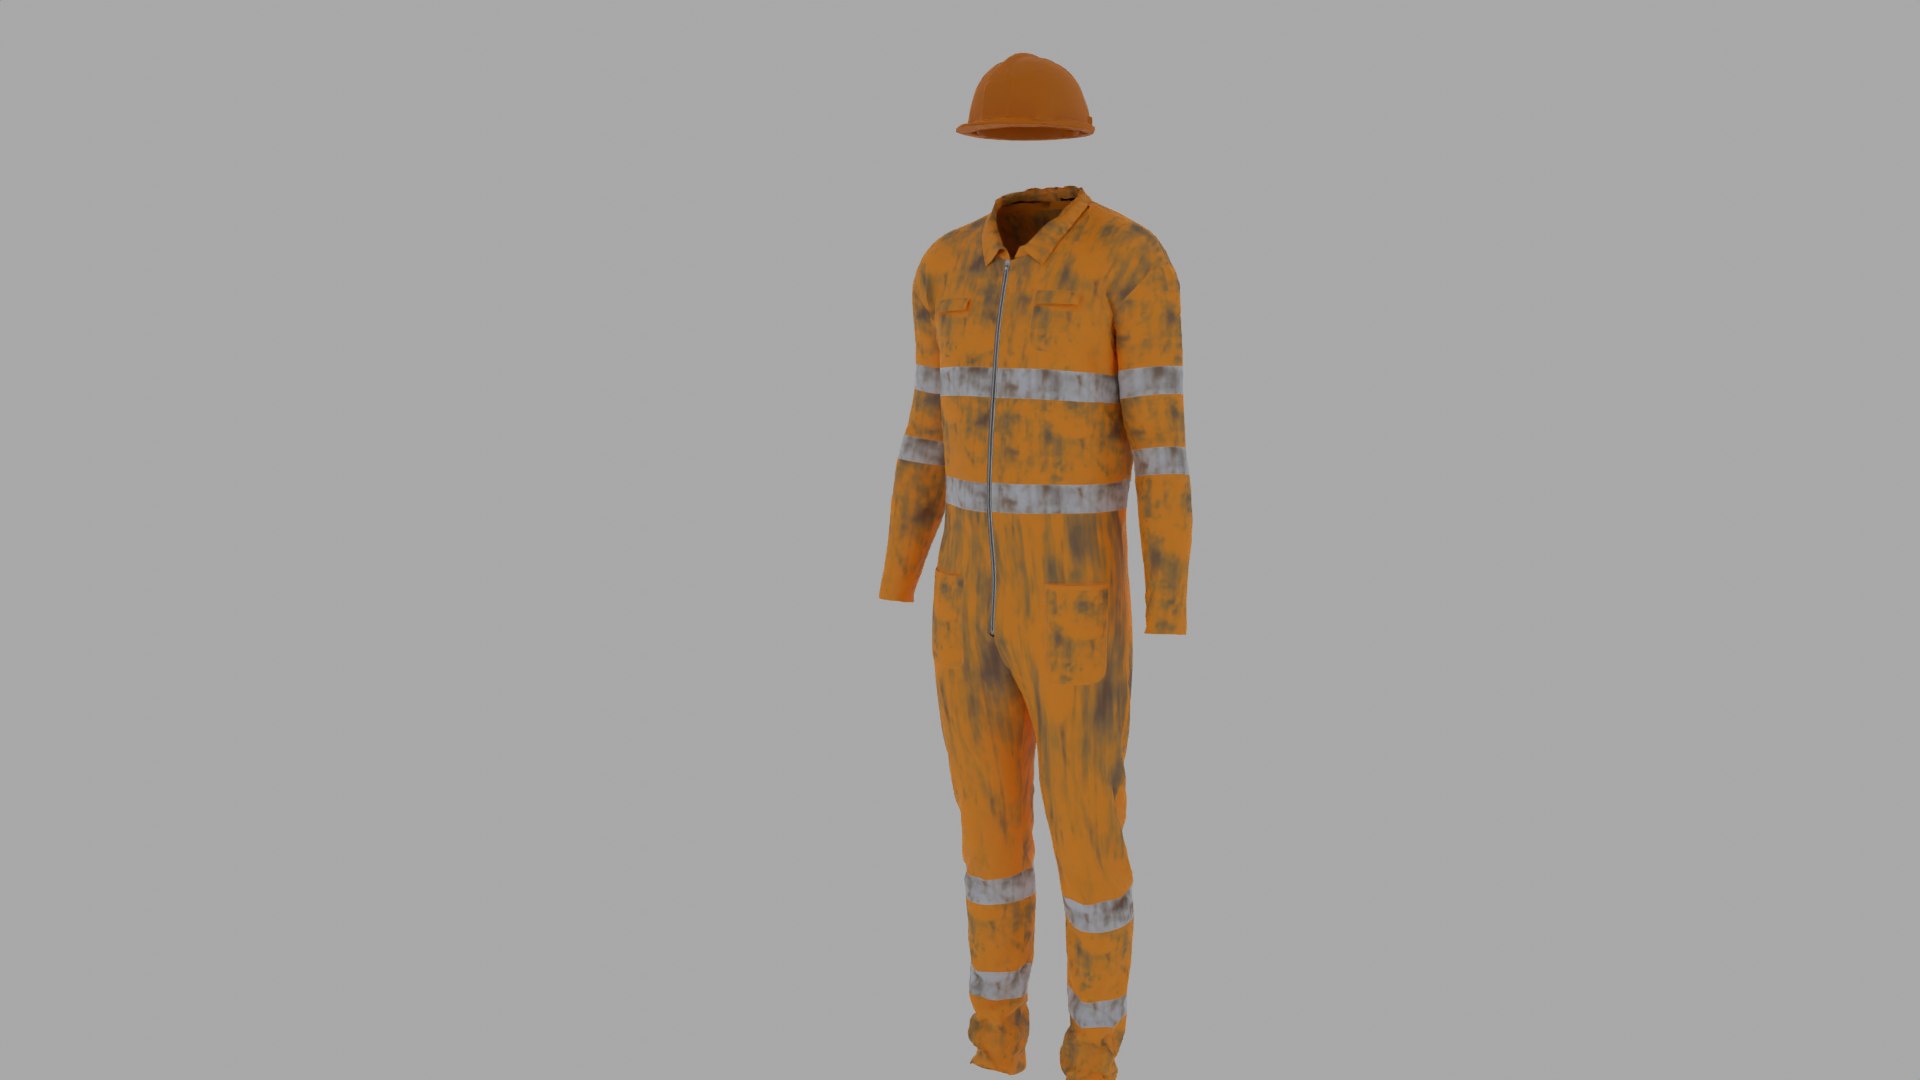 Miner Uniform 3D model - TurboSquid 1973157